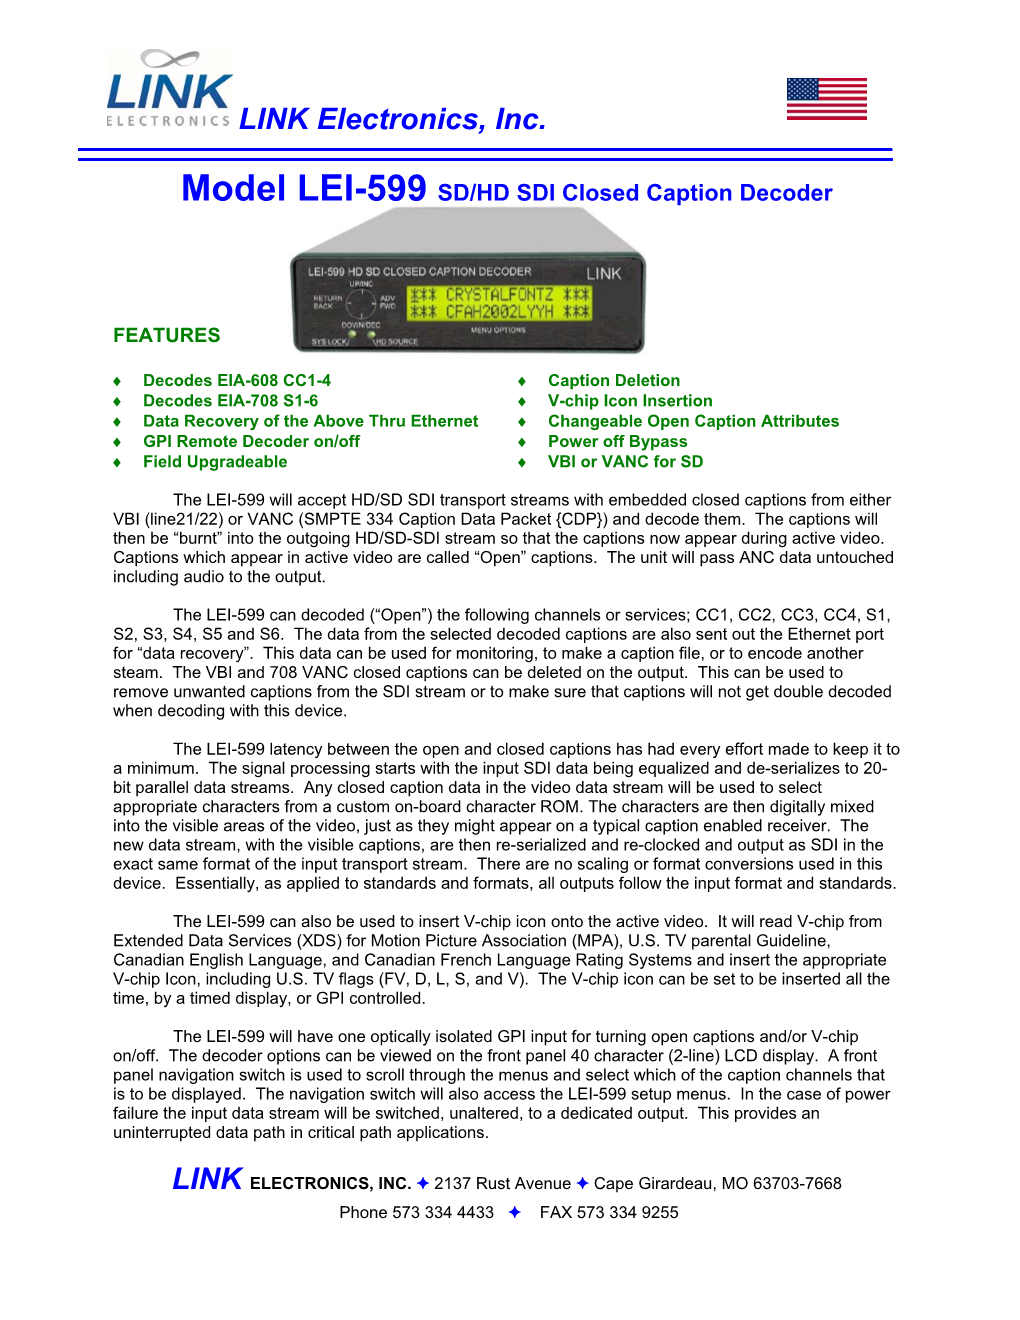 LINK Electronics, Inc. Model LEI-599 SD/HD SDI Closed